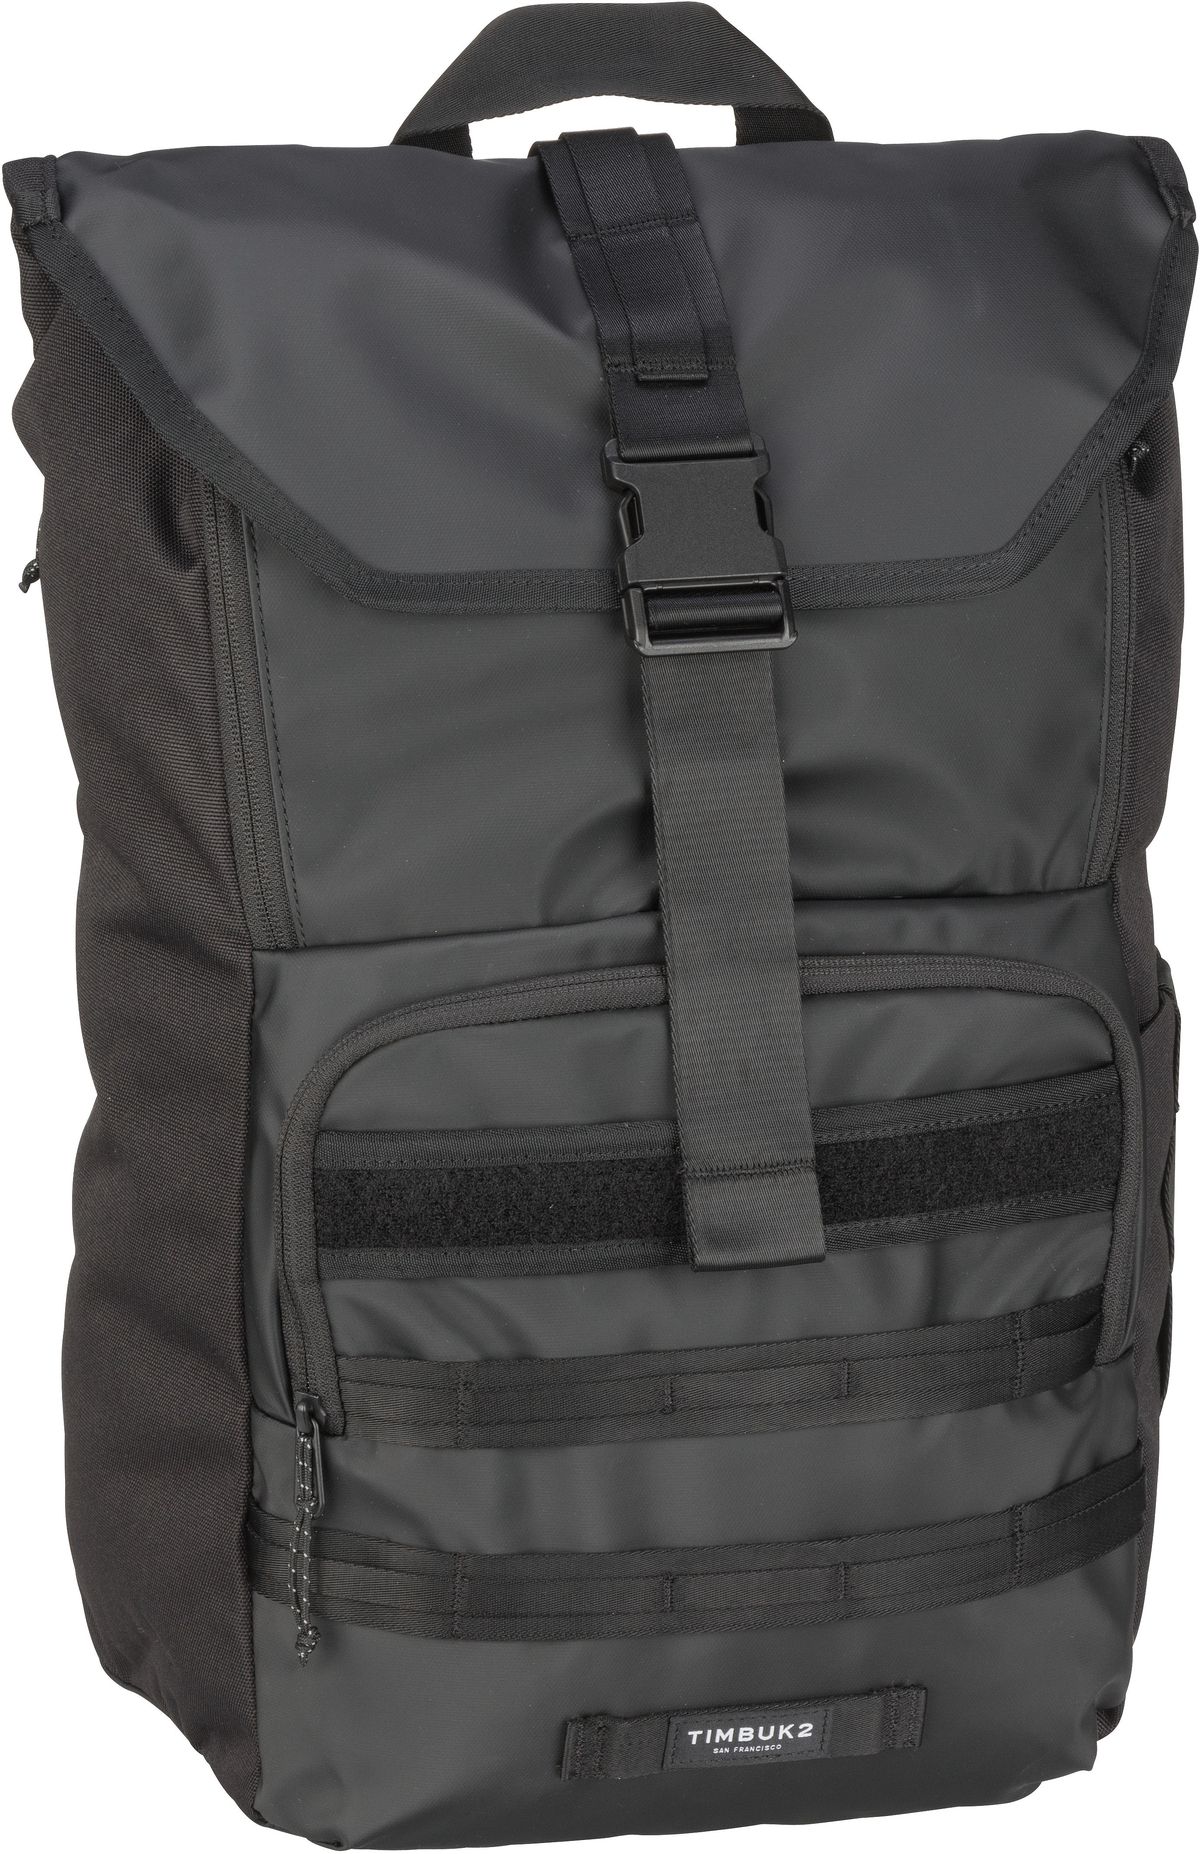 Timbuk2 Spire Backpack - Jet Black